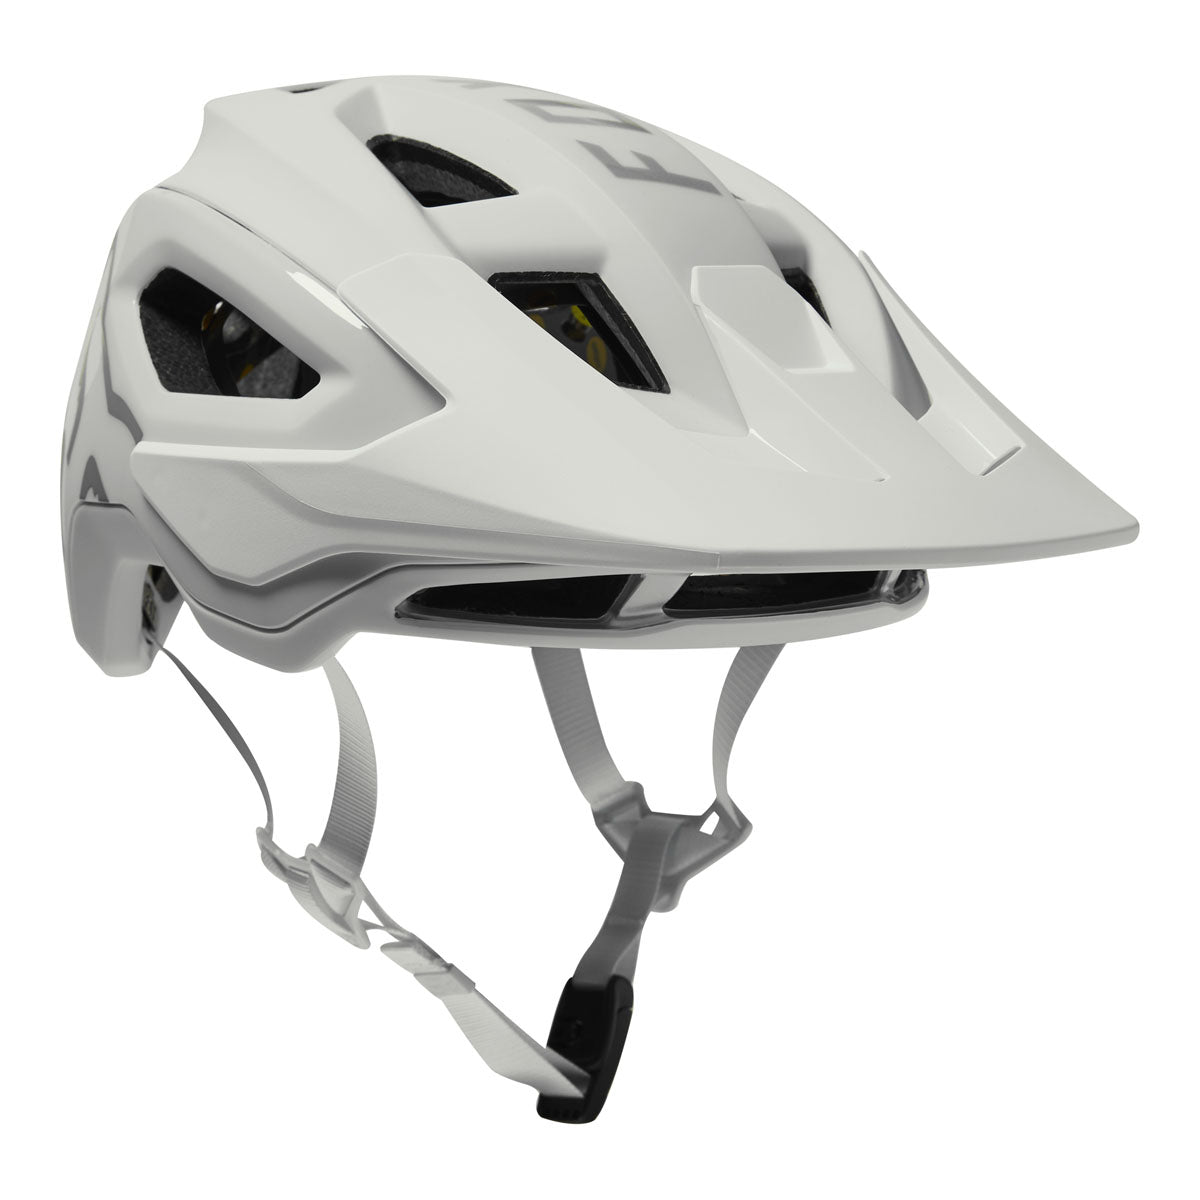 Fox Racing Speedframe Pro Helmet - White